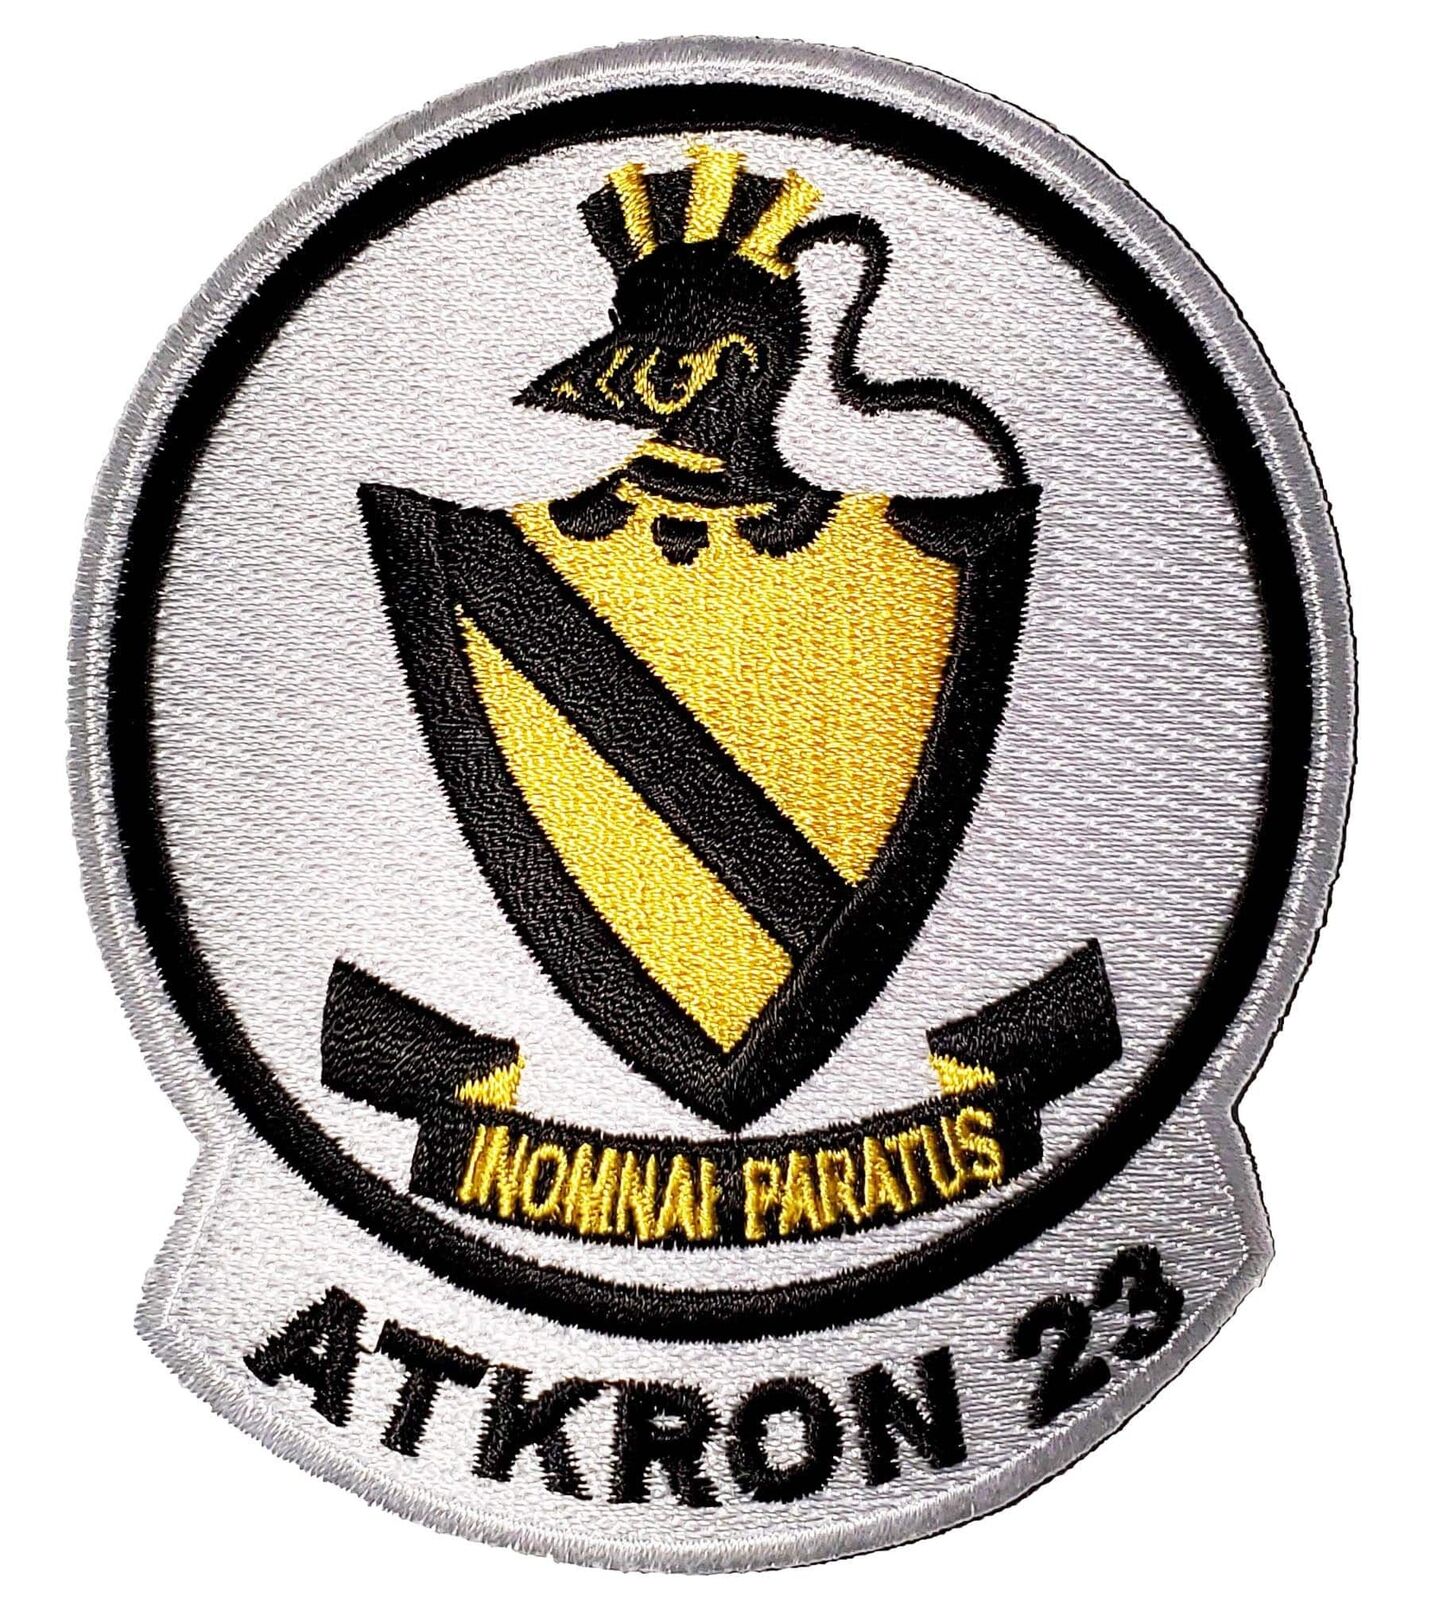 VA-23 Black Knights Squadron Patch - Sew On